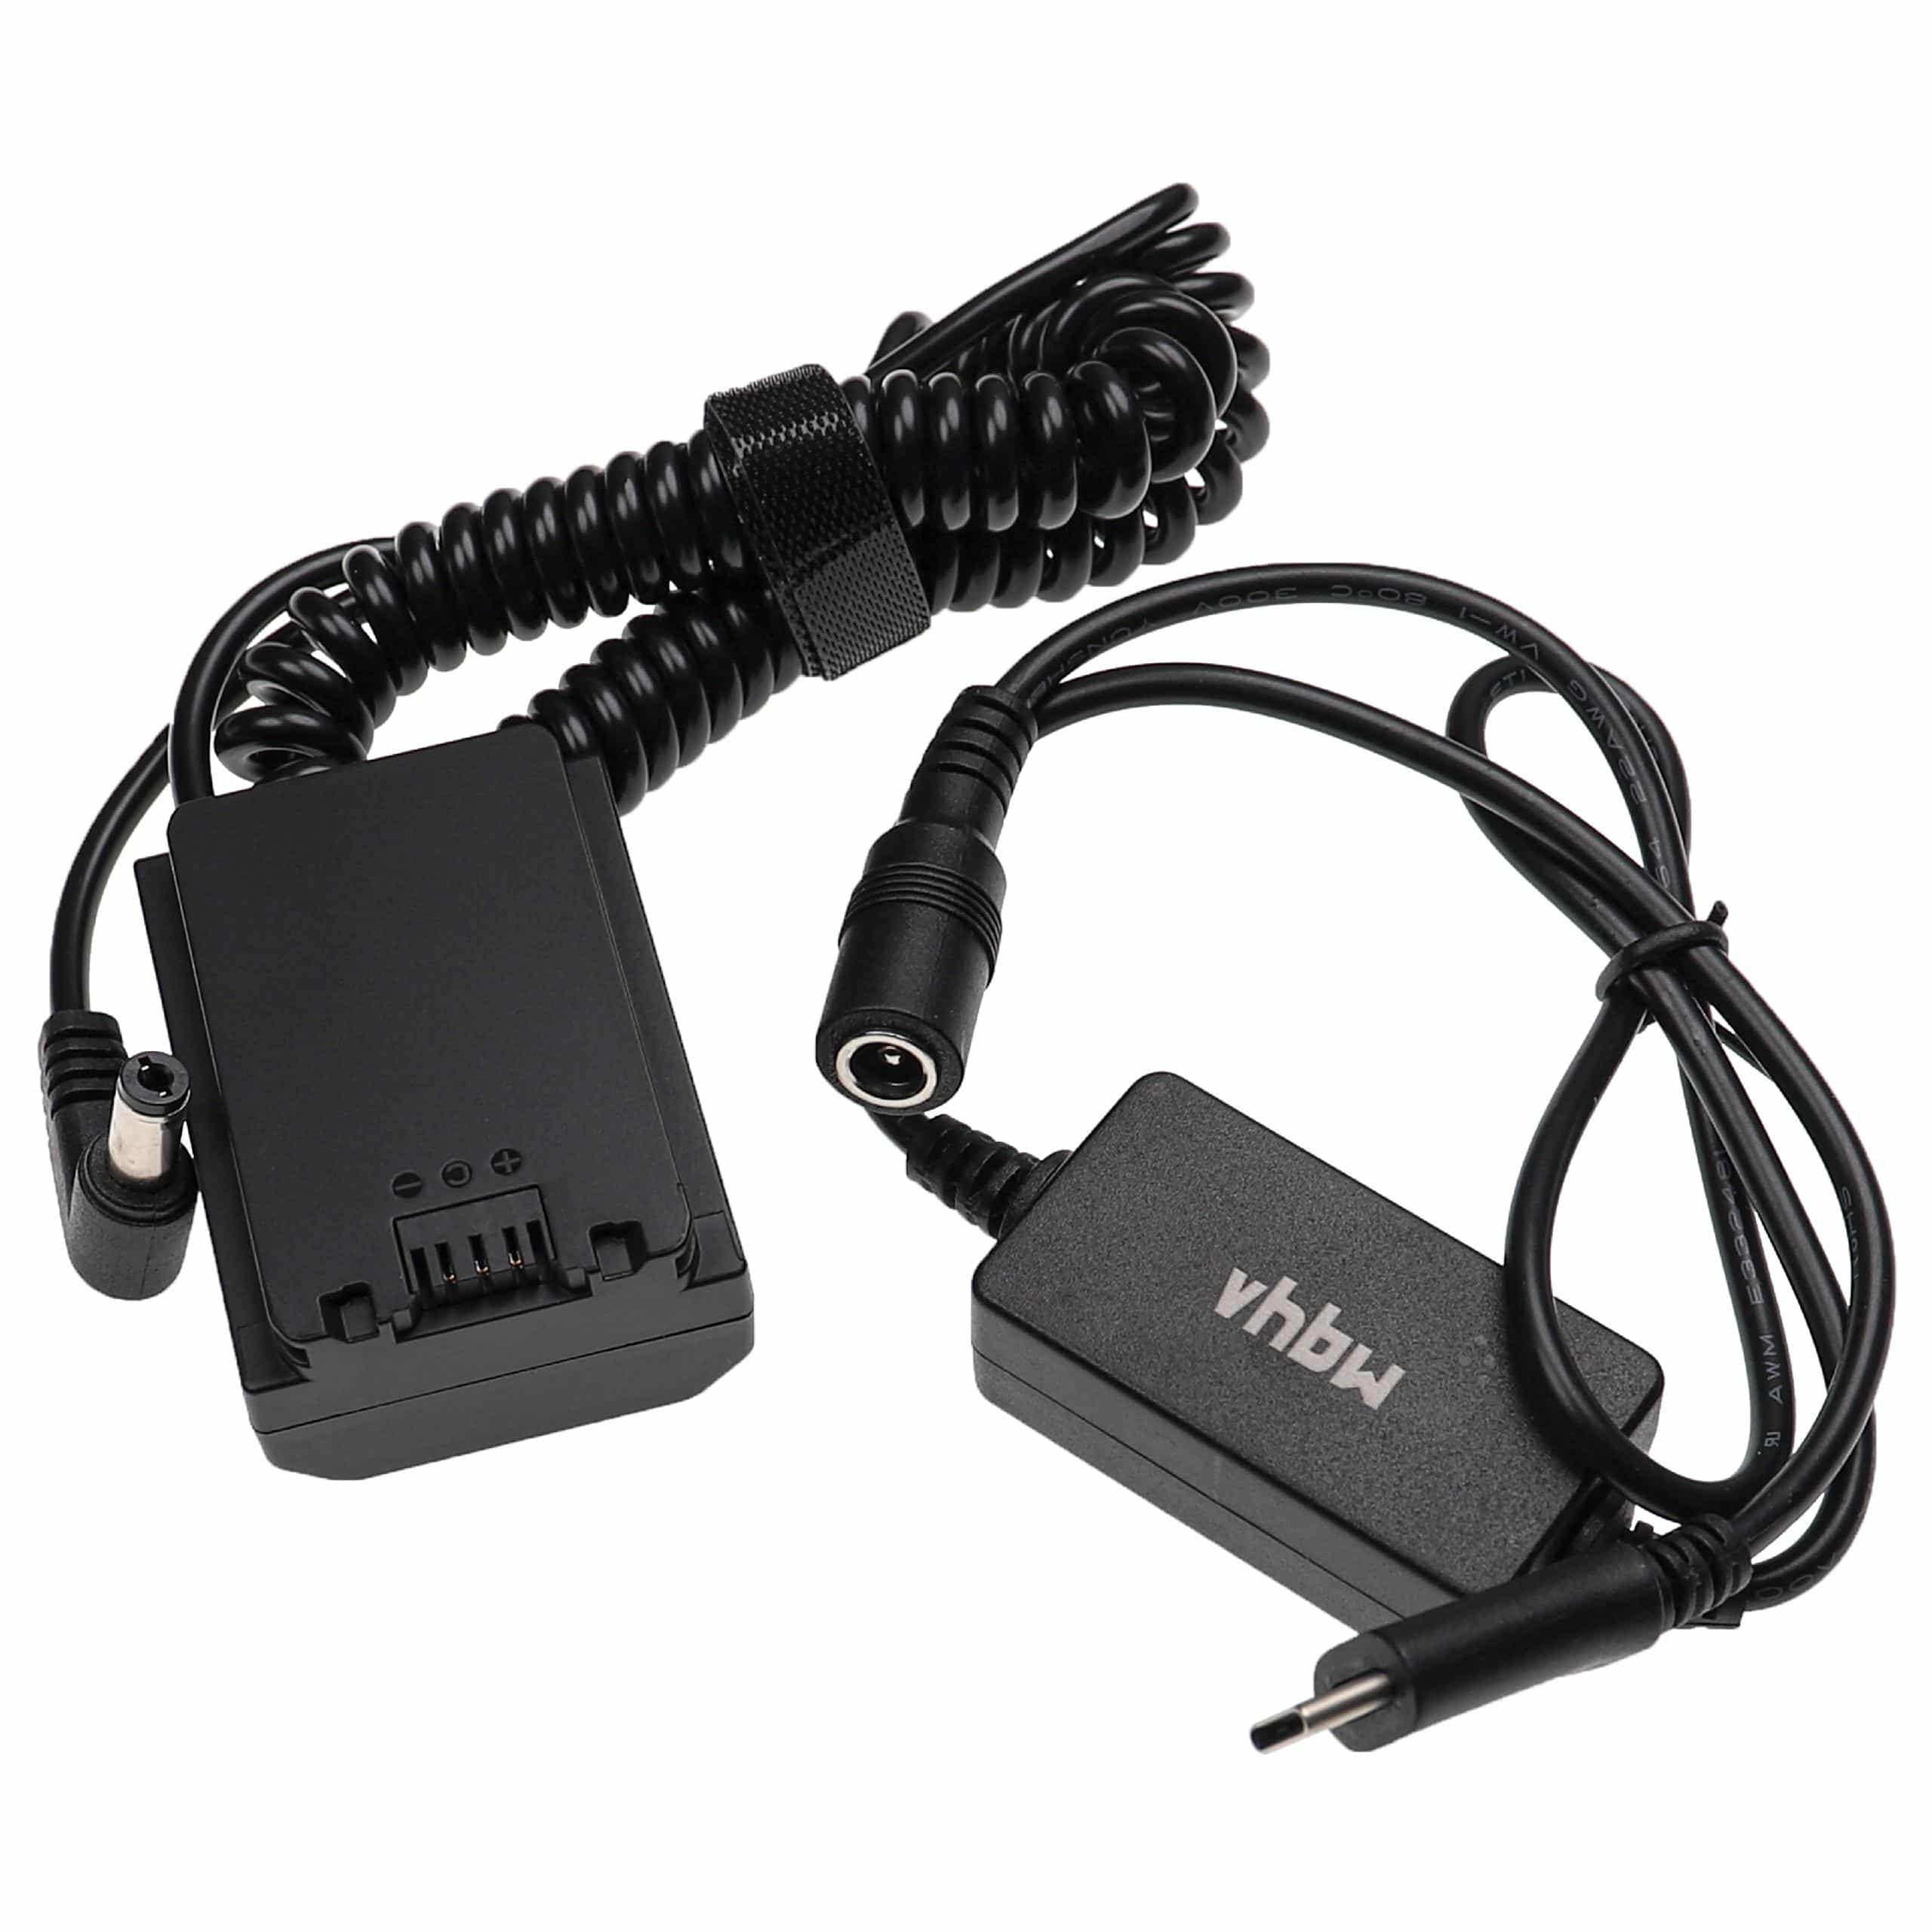 Fuente alimentación USB reemplaza Sony AC-FZ100 para cámaras + acoplador CC reemplaza Sony NP-FZ100